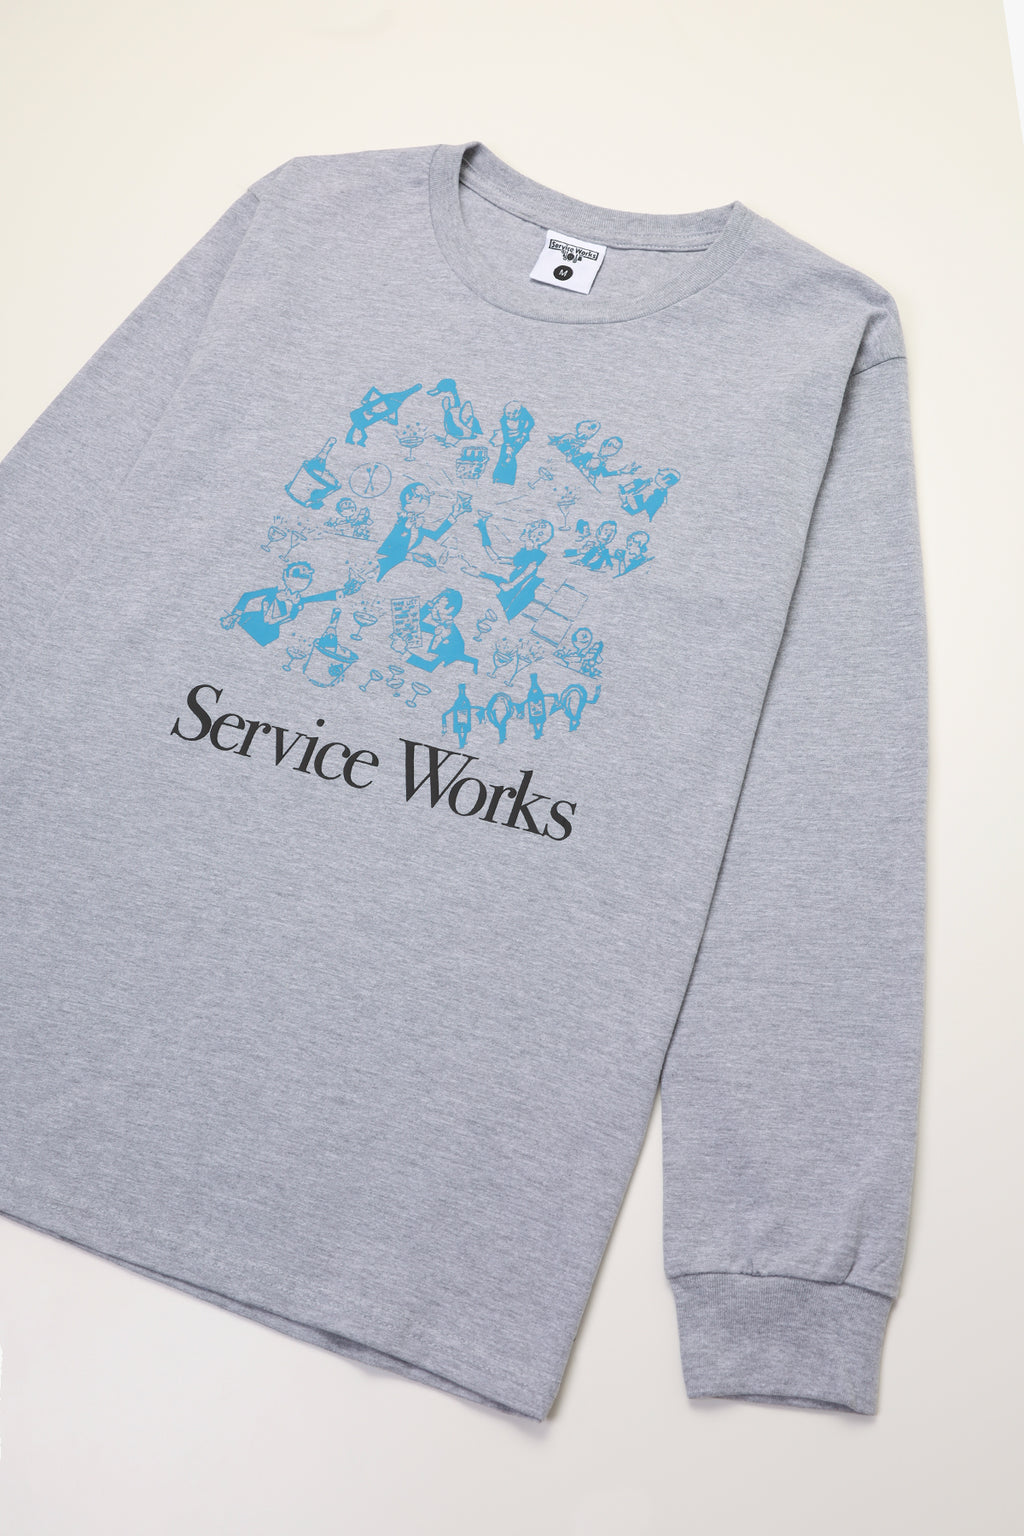 Service Works - Soiree Long Sleeve Tee - Grey